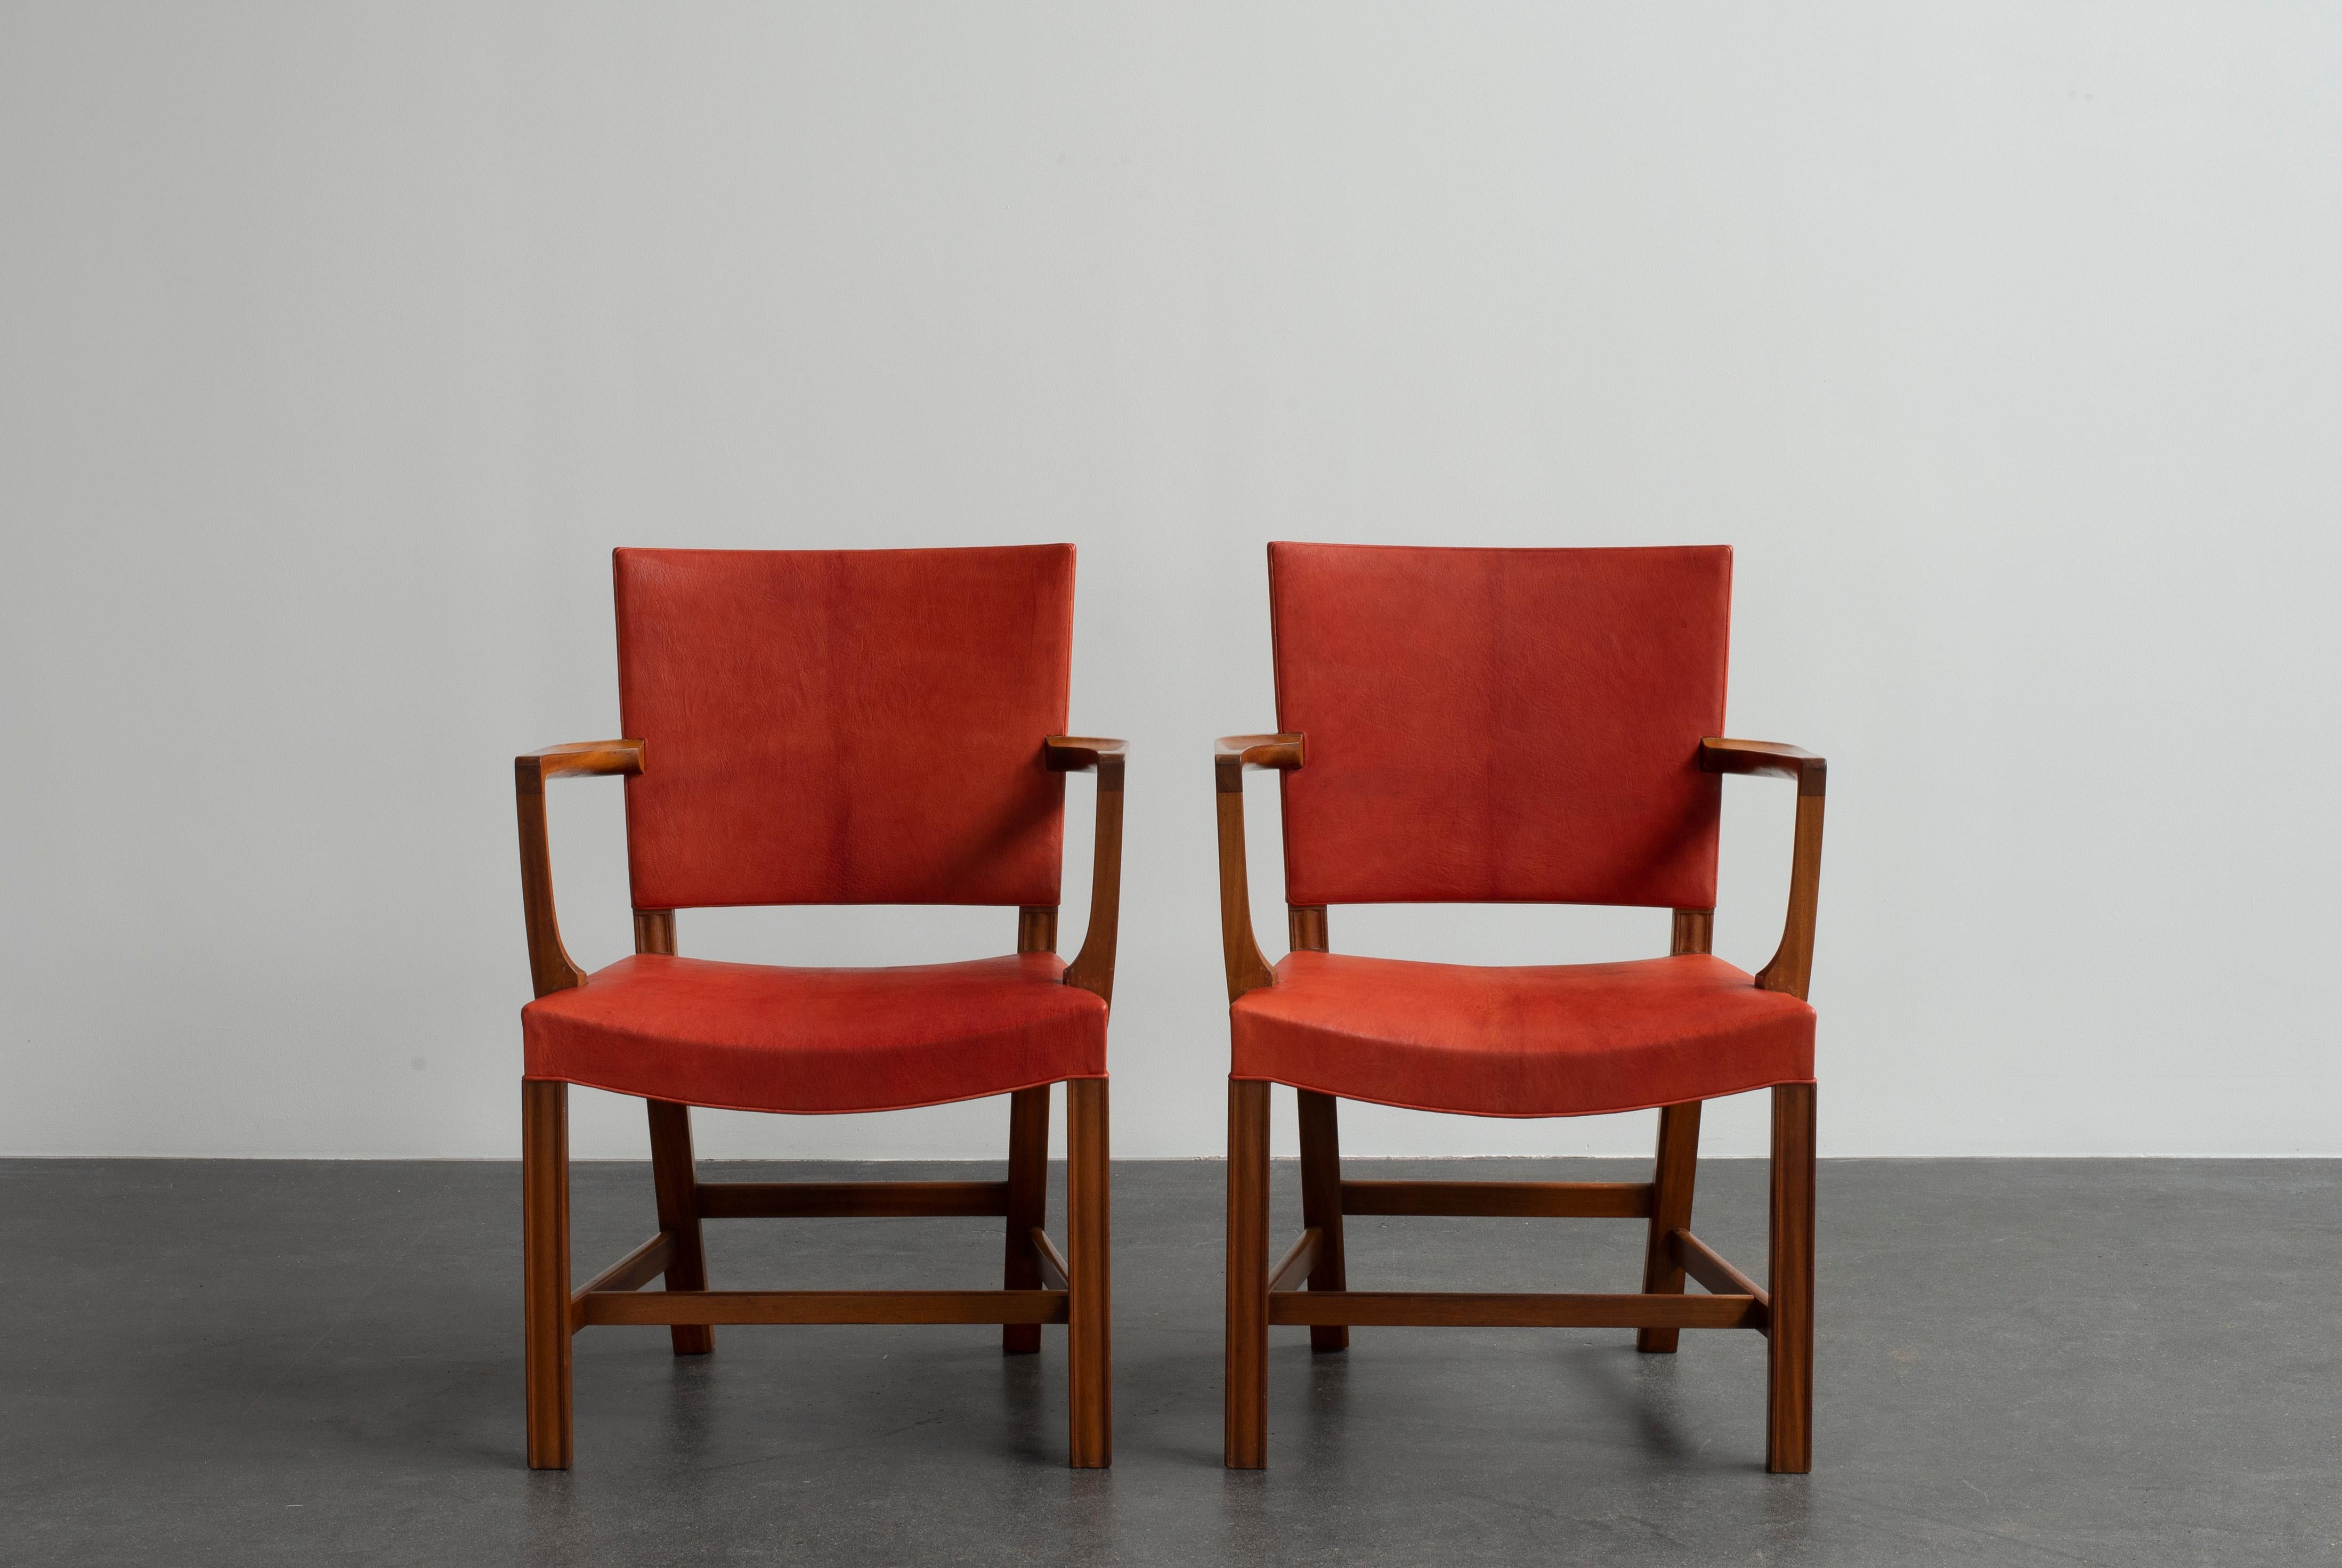 Kaare Klint pair of armchairs in mahogany and Niger leather. Executed by Rud. Rasmussen.

Reverse with paper label ‘RUD. RASMUSSEN/SNEDKERIER/45 NØRREBROGADE/KØBENHAVN.